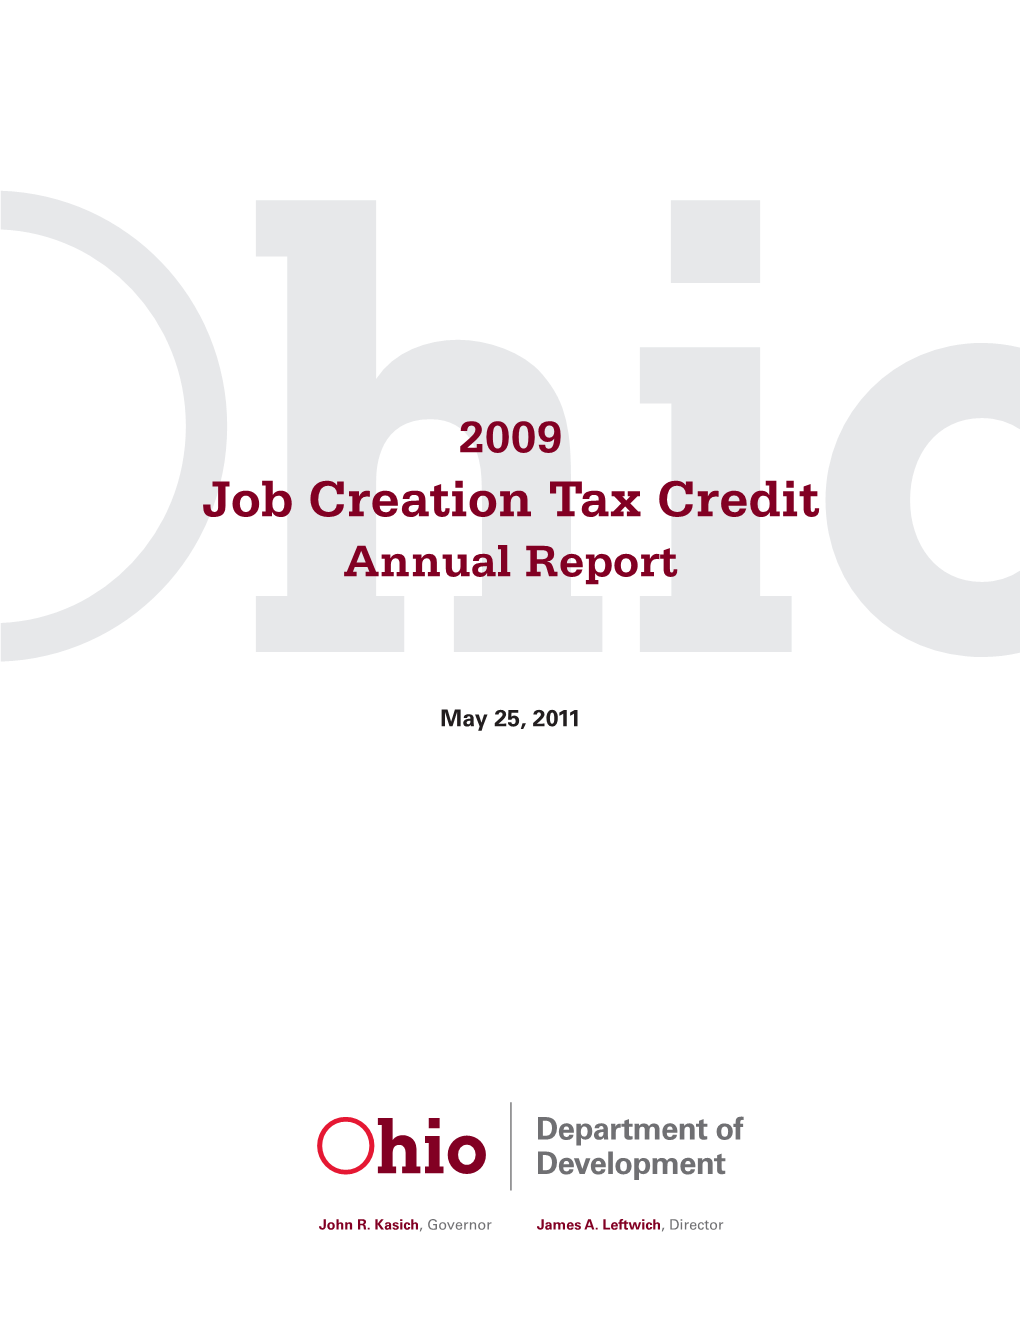 Job Creation Tax Credit Annual Report